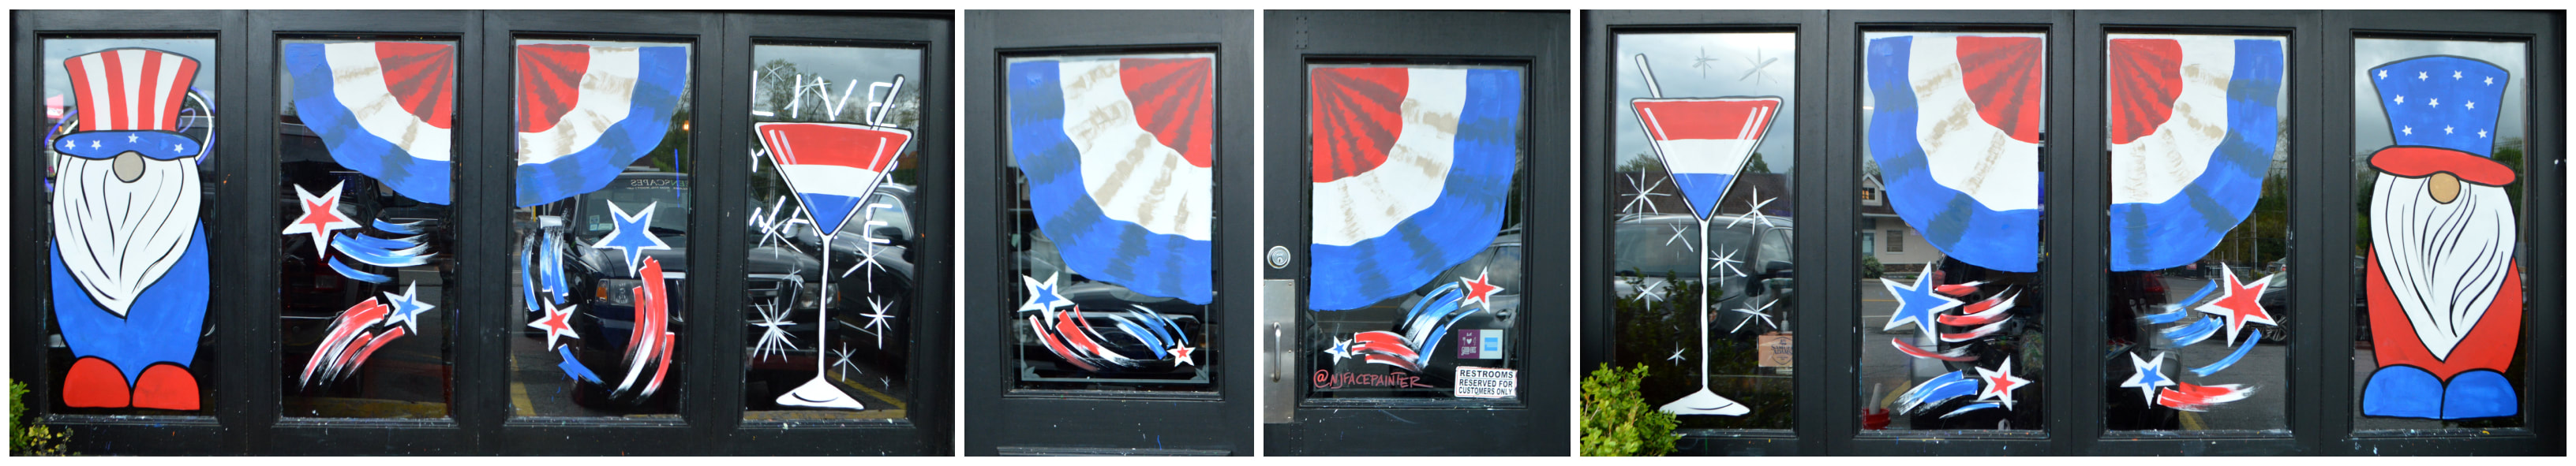 Patriotic Summer Window Art at The Copper Still in Pomona, Rockland County, NY